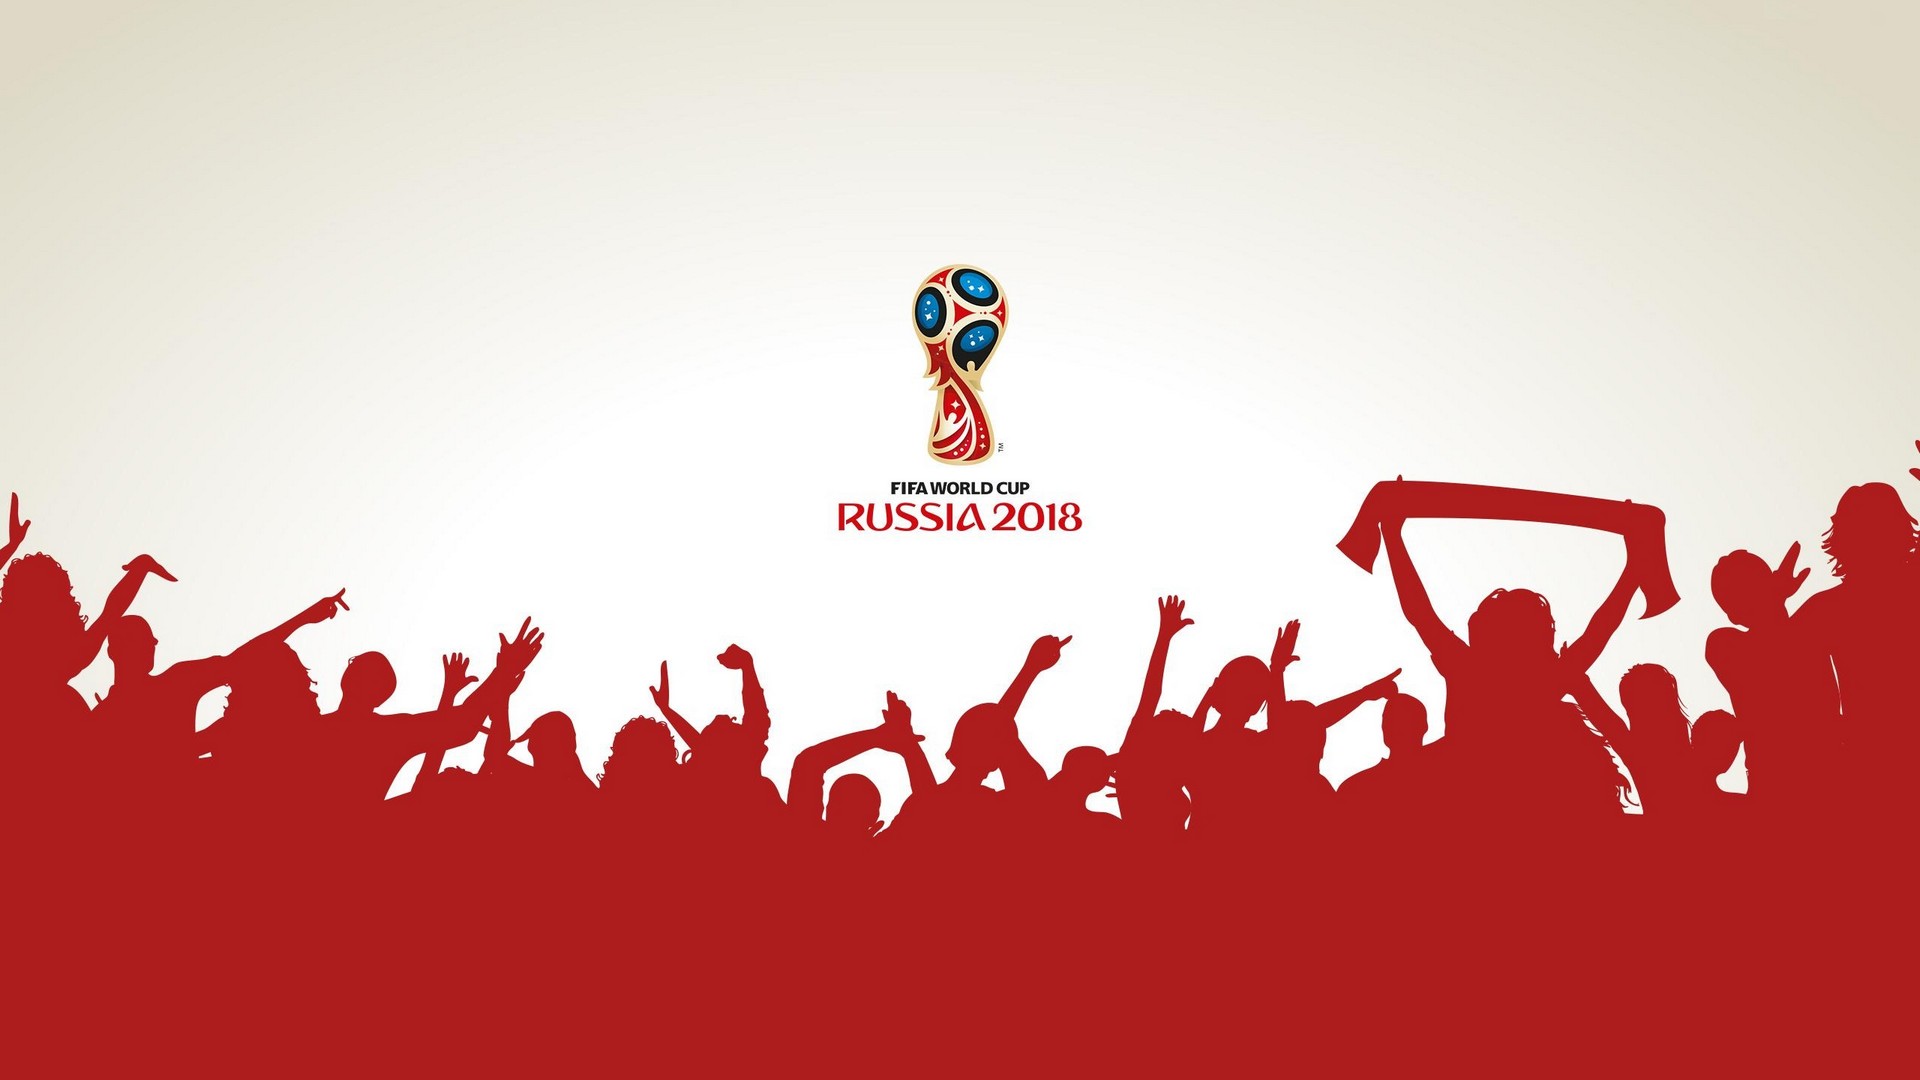 FIFA World Cup Russia 2018